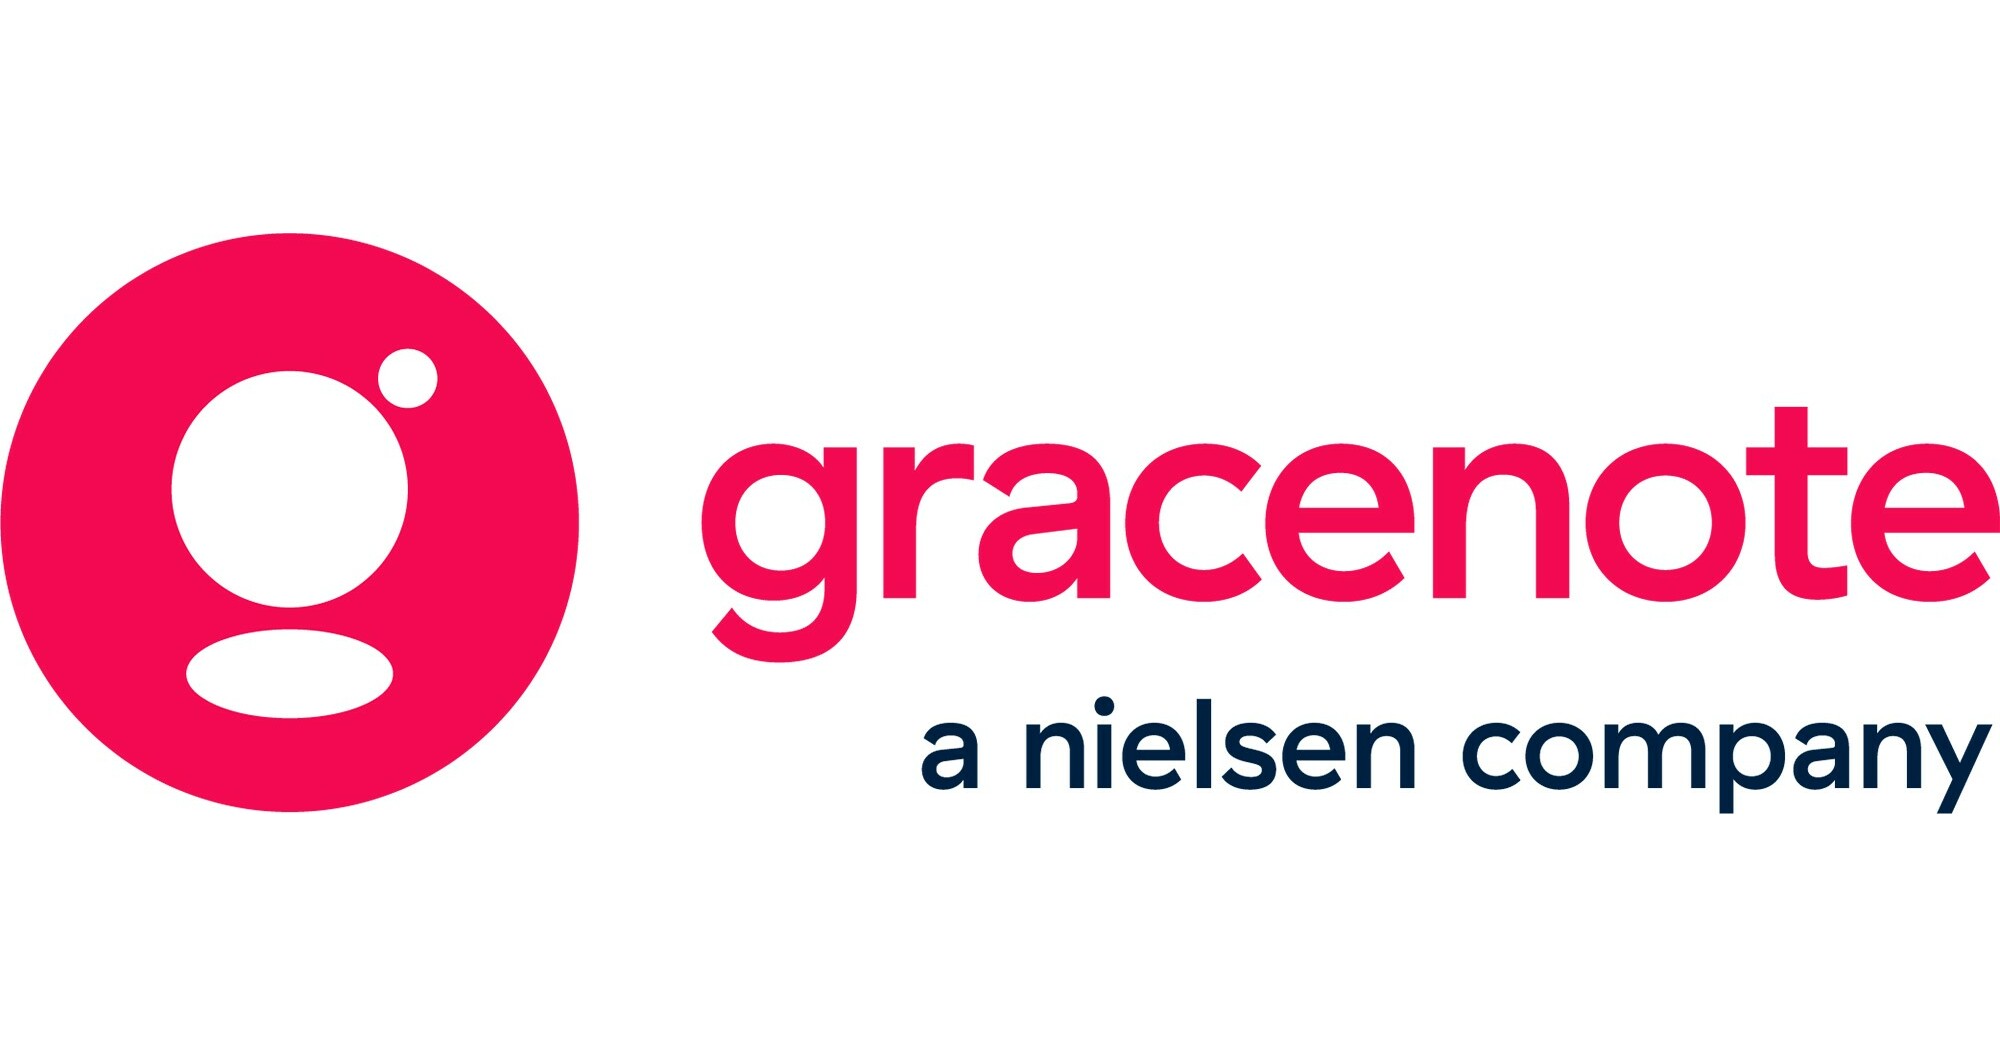 Gracenote A Nielsen Company Logo jpg?p=facebook.